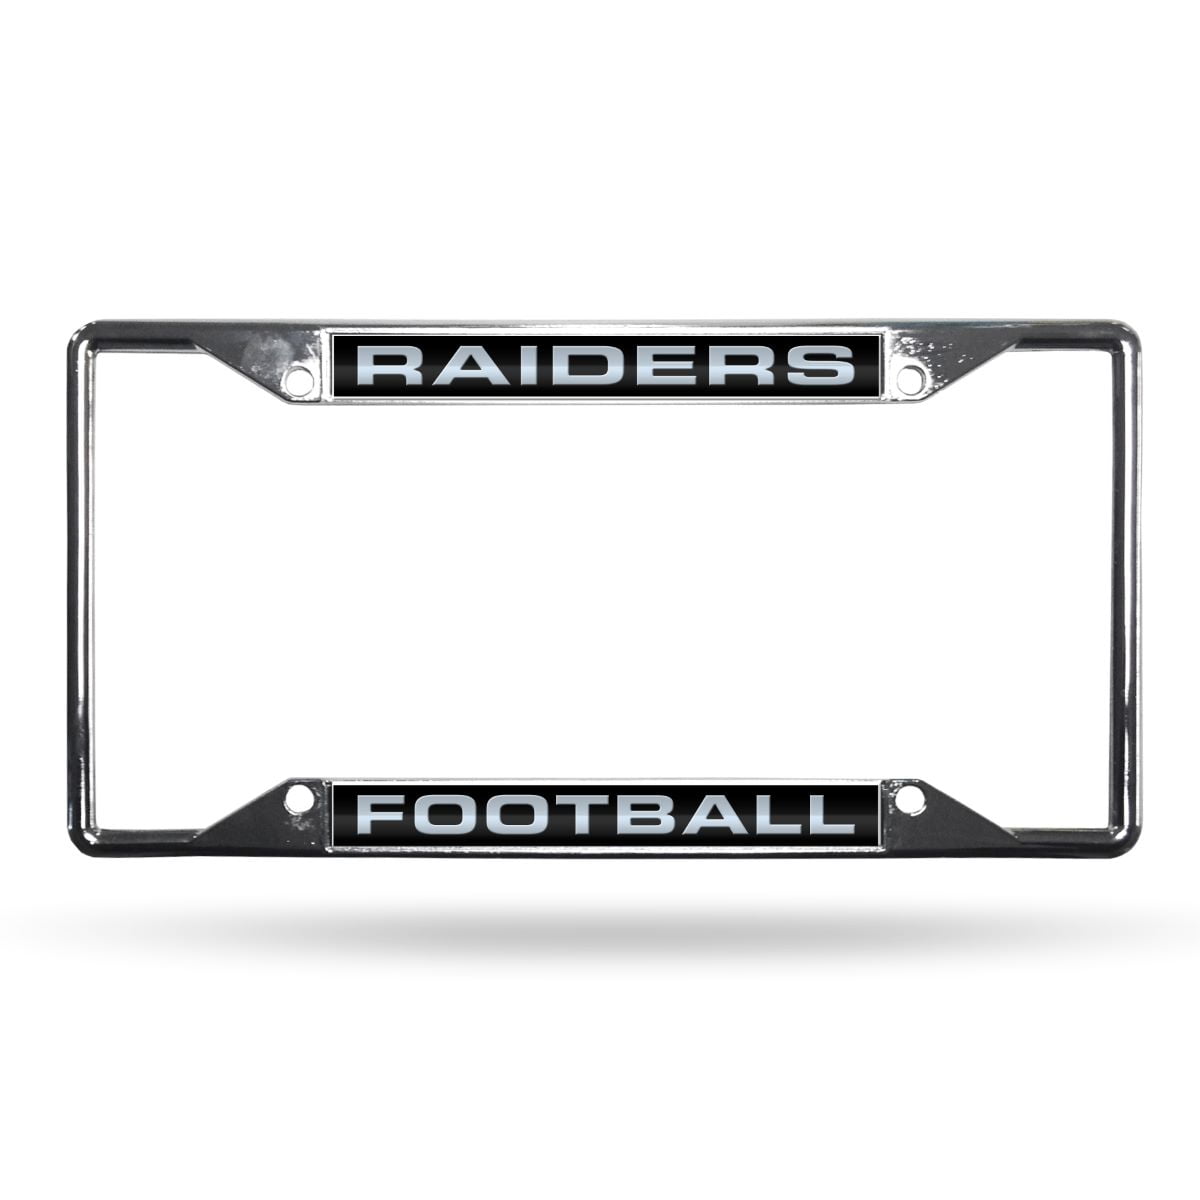 Las Vegas Raiders Black License Plate Frame